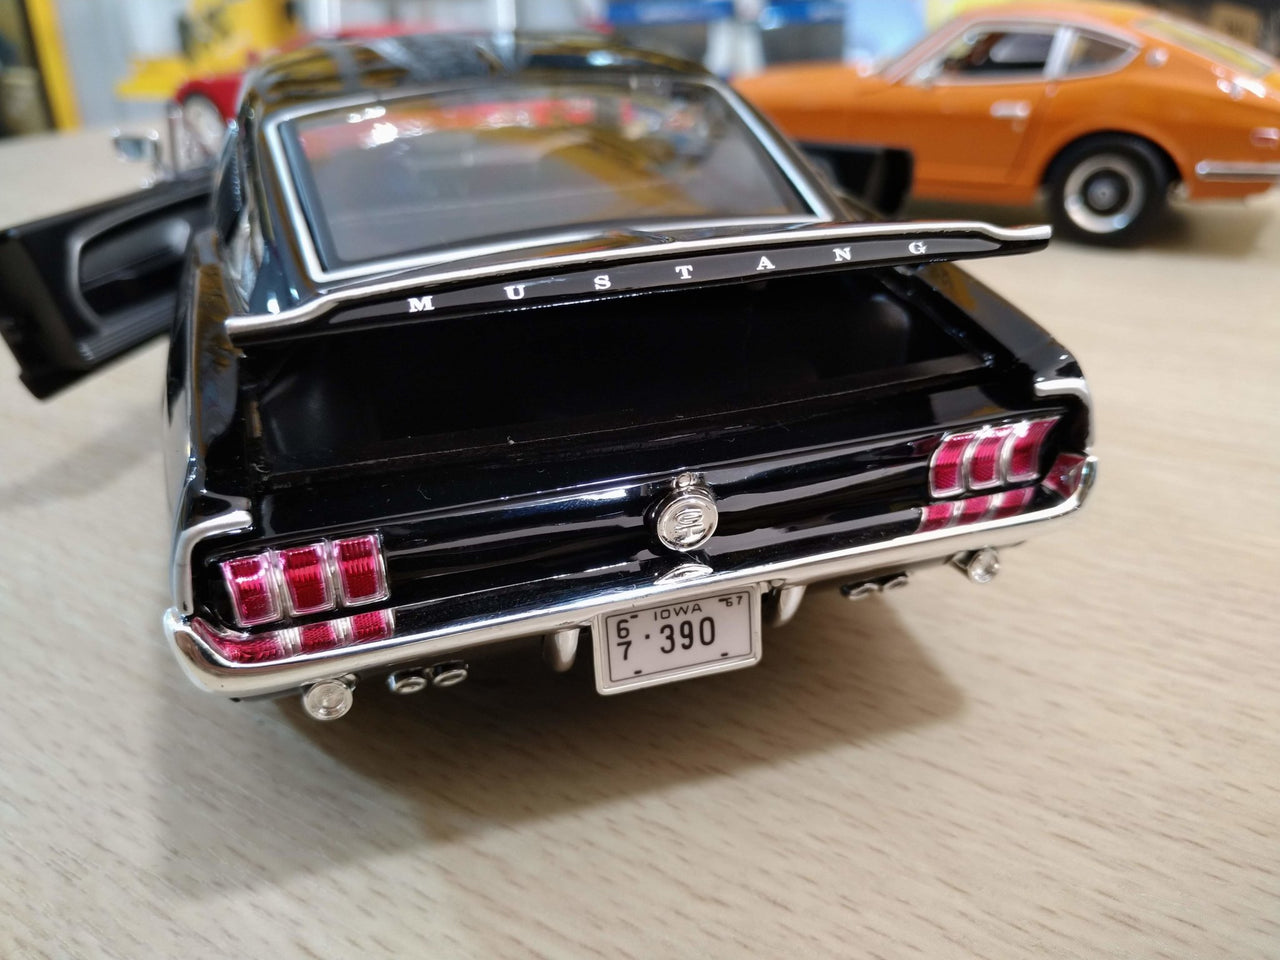 31166 Auto Ford Mustang Gta Fastback Año 1967 Escala 1:18 (Maisto Special Edition) - CAT SERVICE PERU S.A.C.